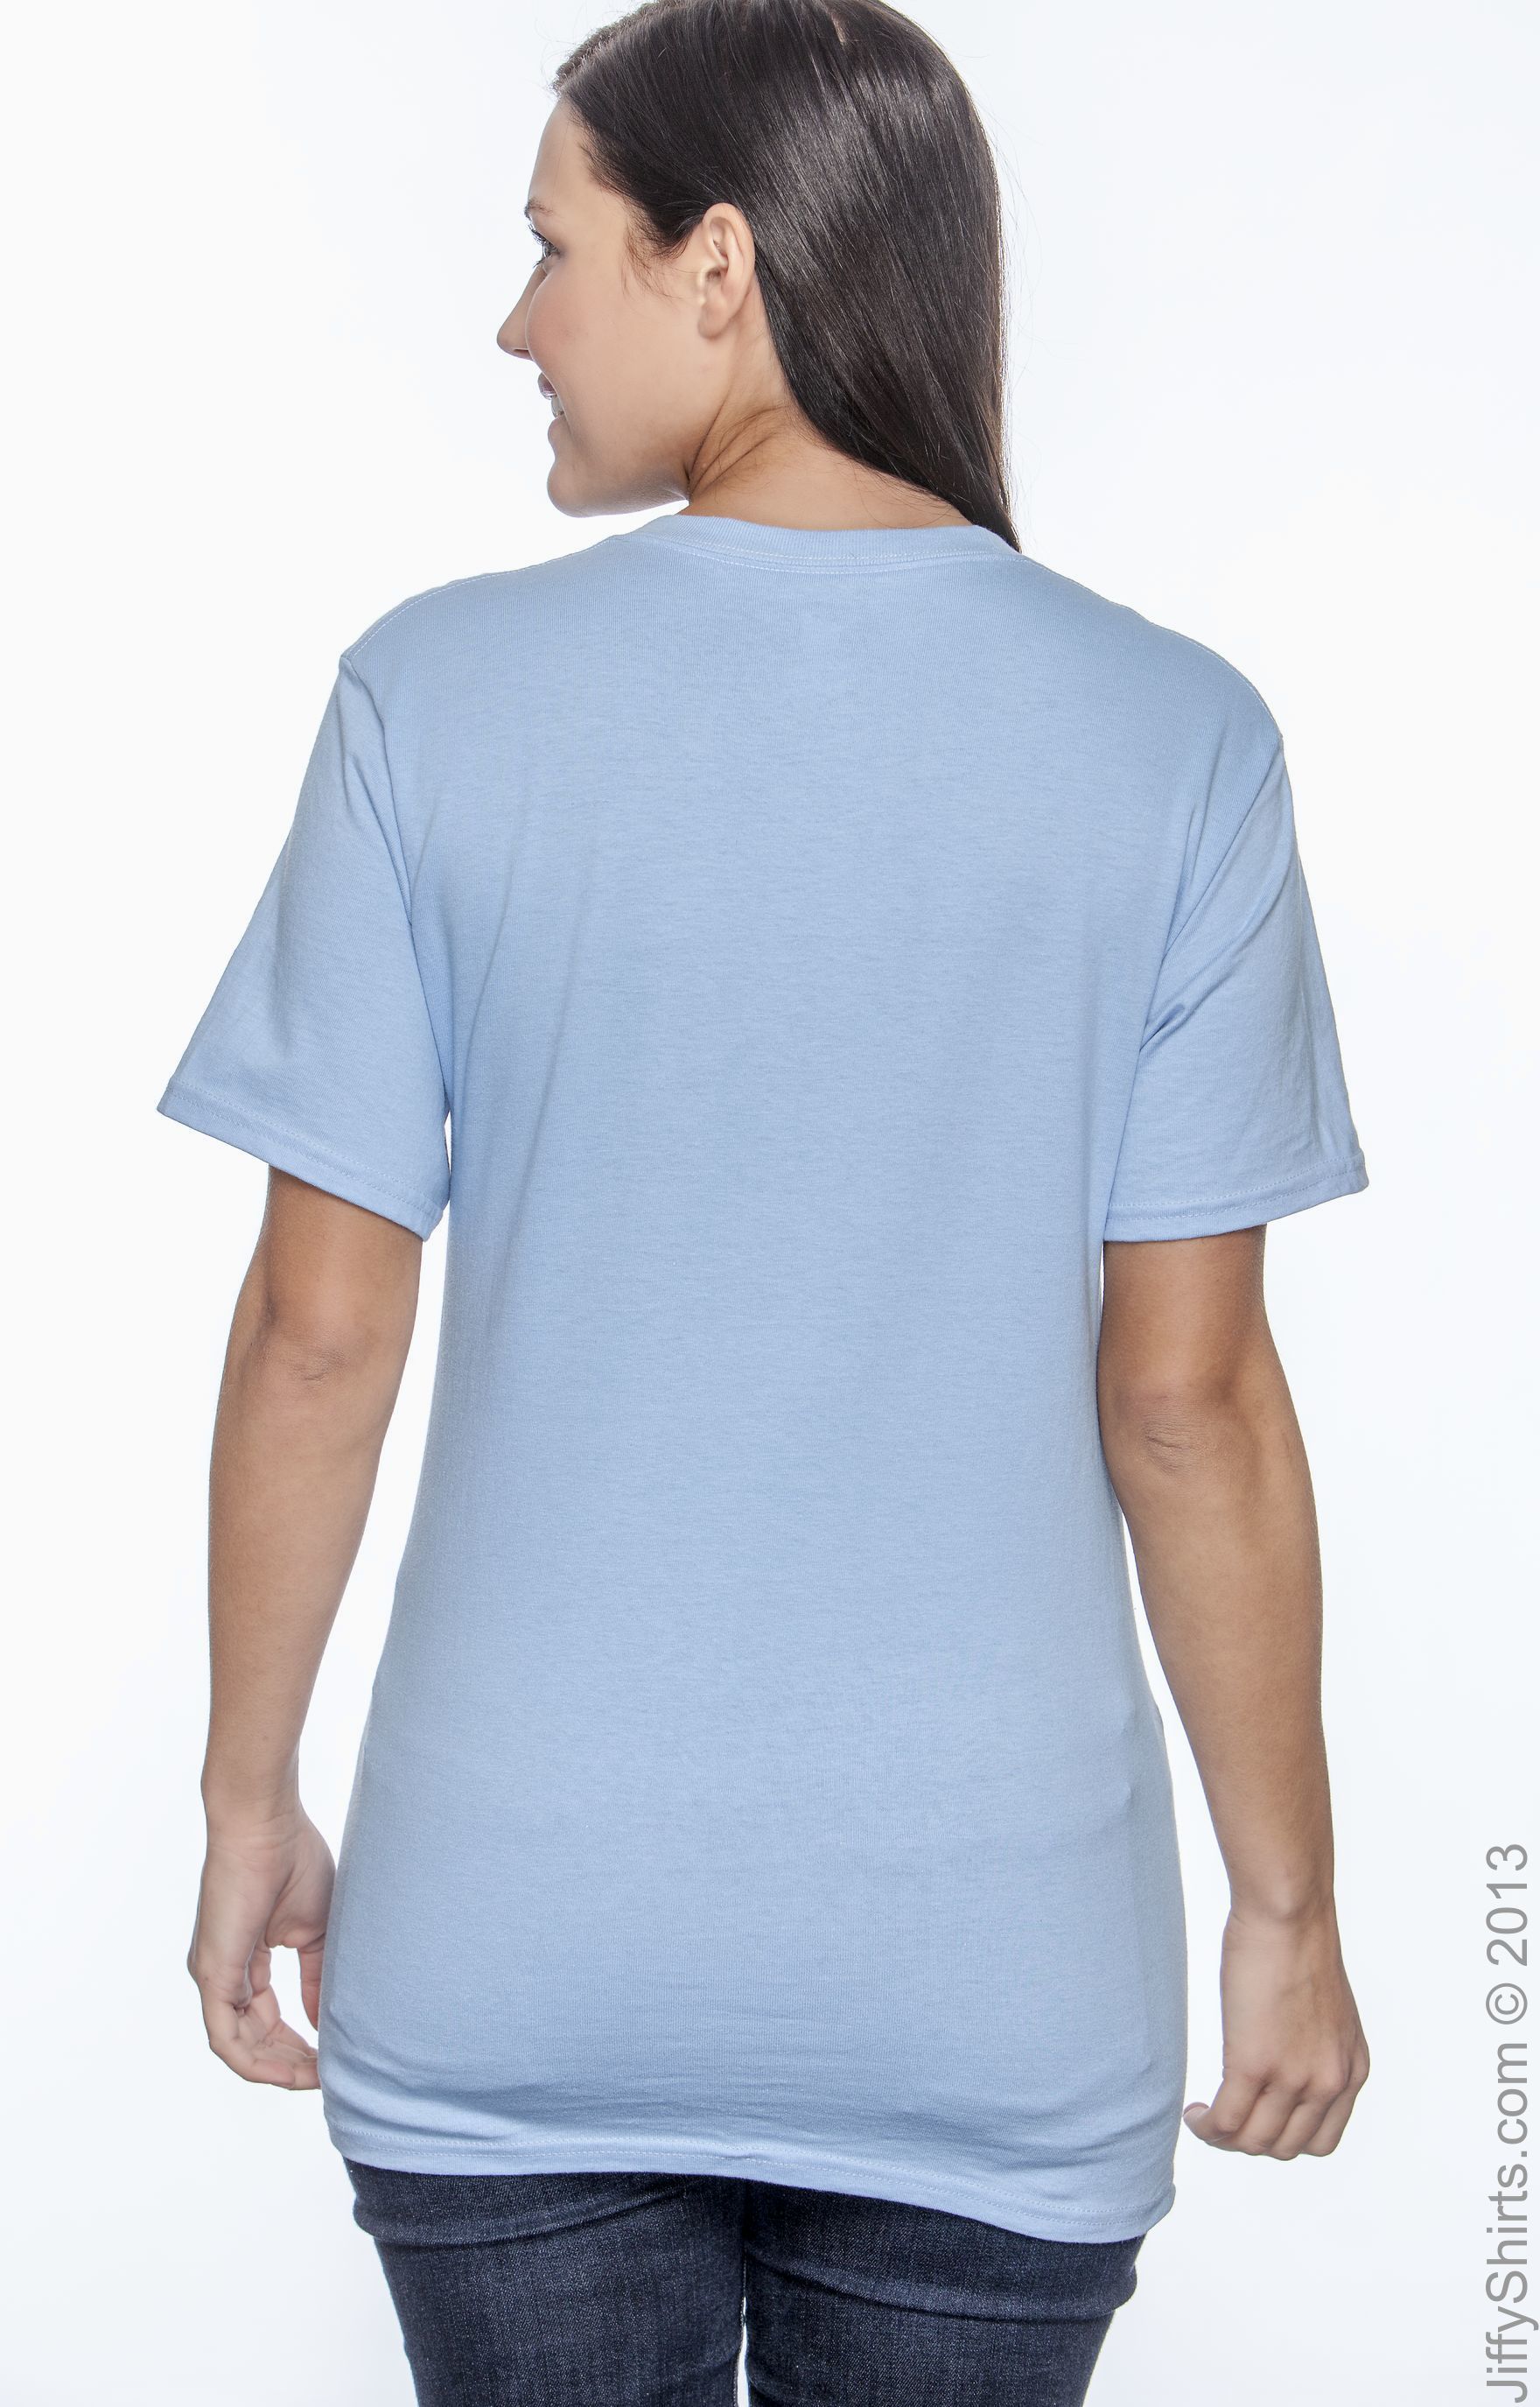 Hanes H5590 Light Blue 6.1 oz. Authentic Short Sleeve Pocket Tee |  JiffyShirts